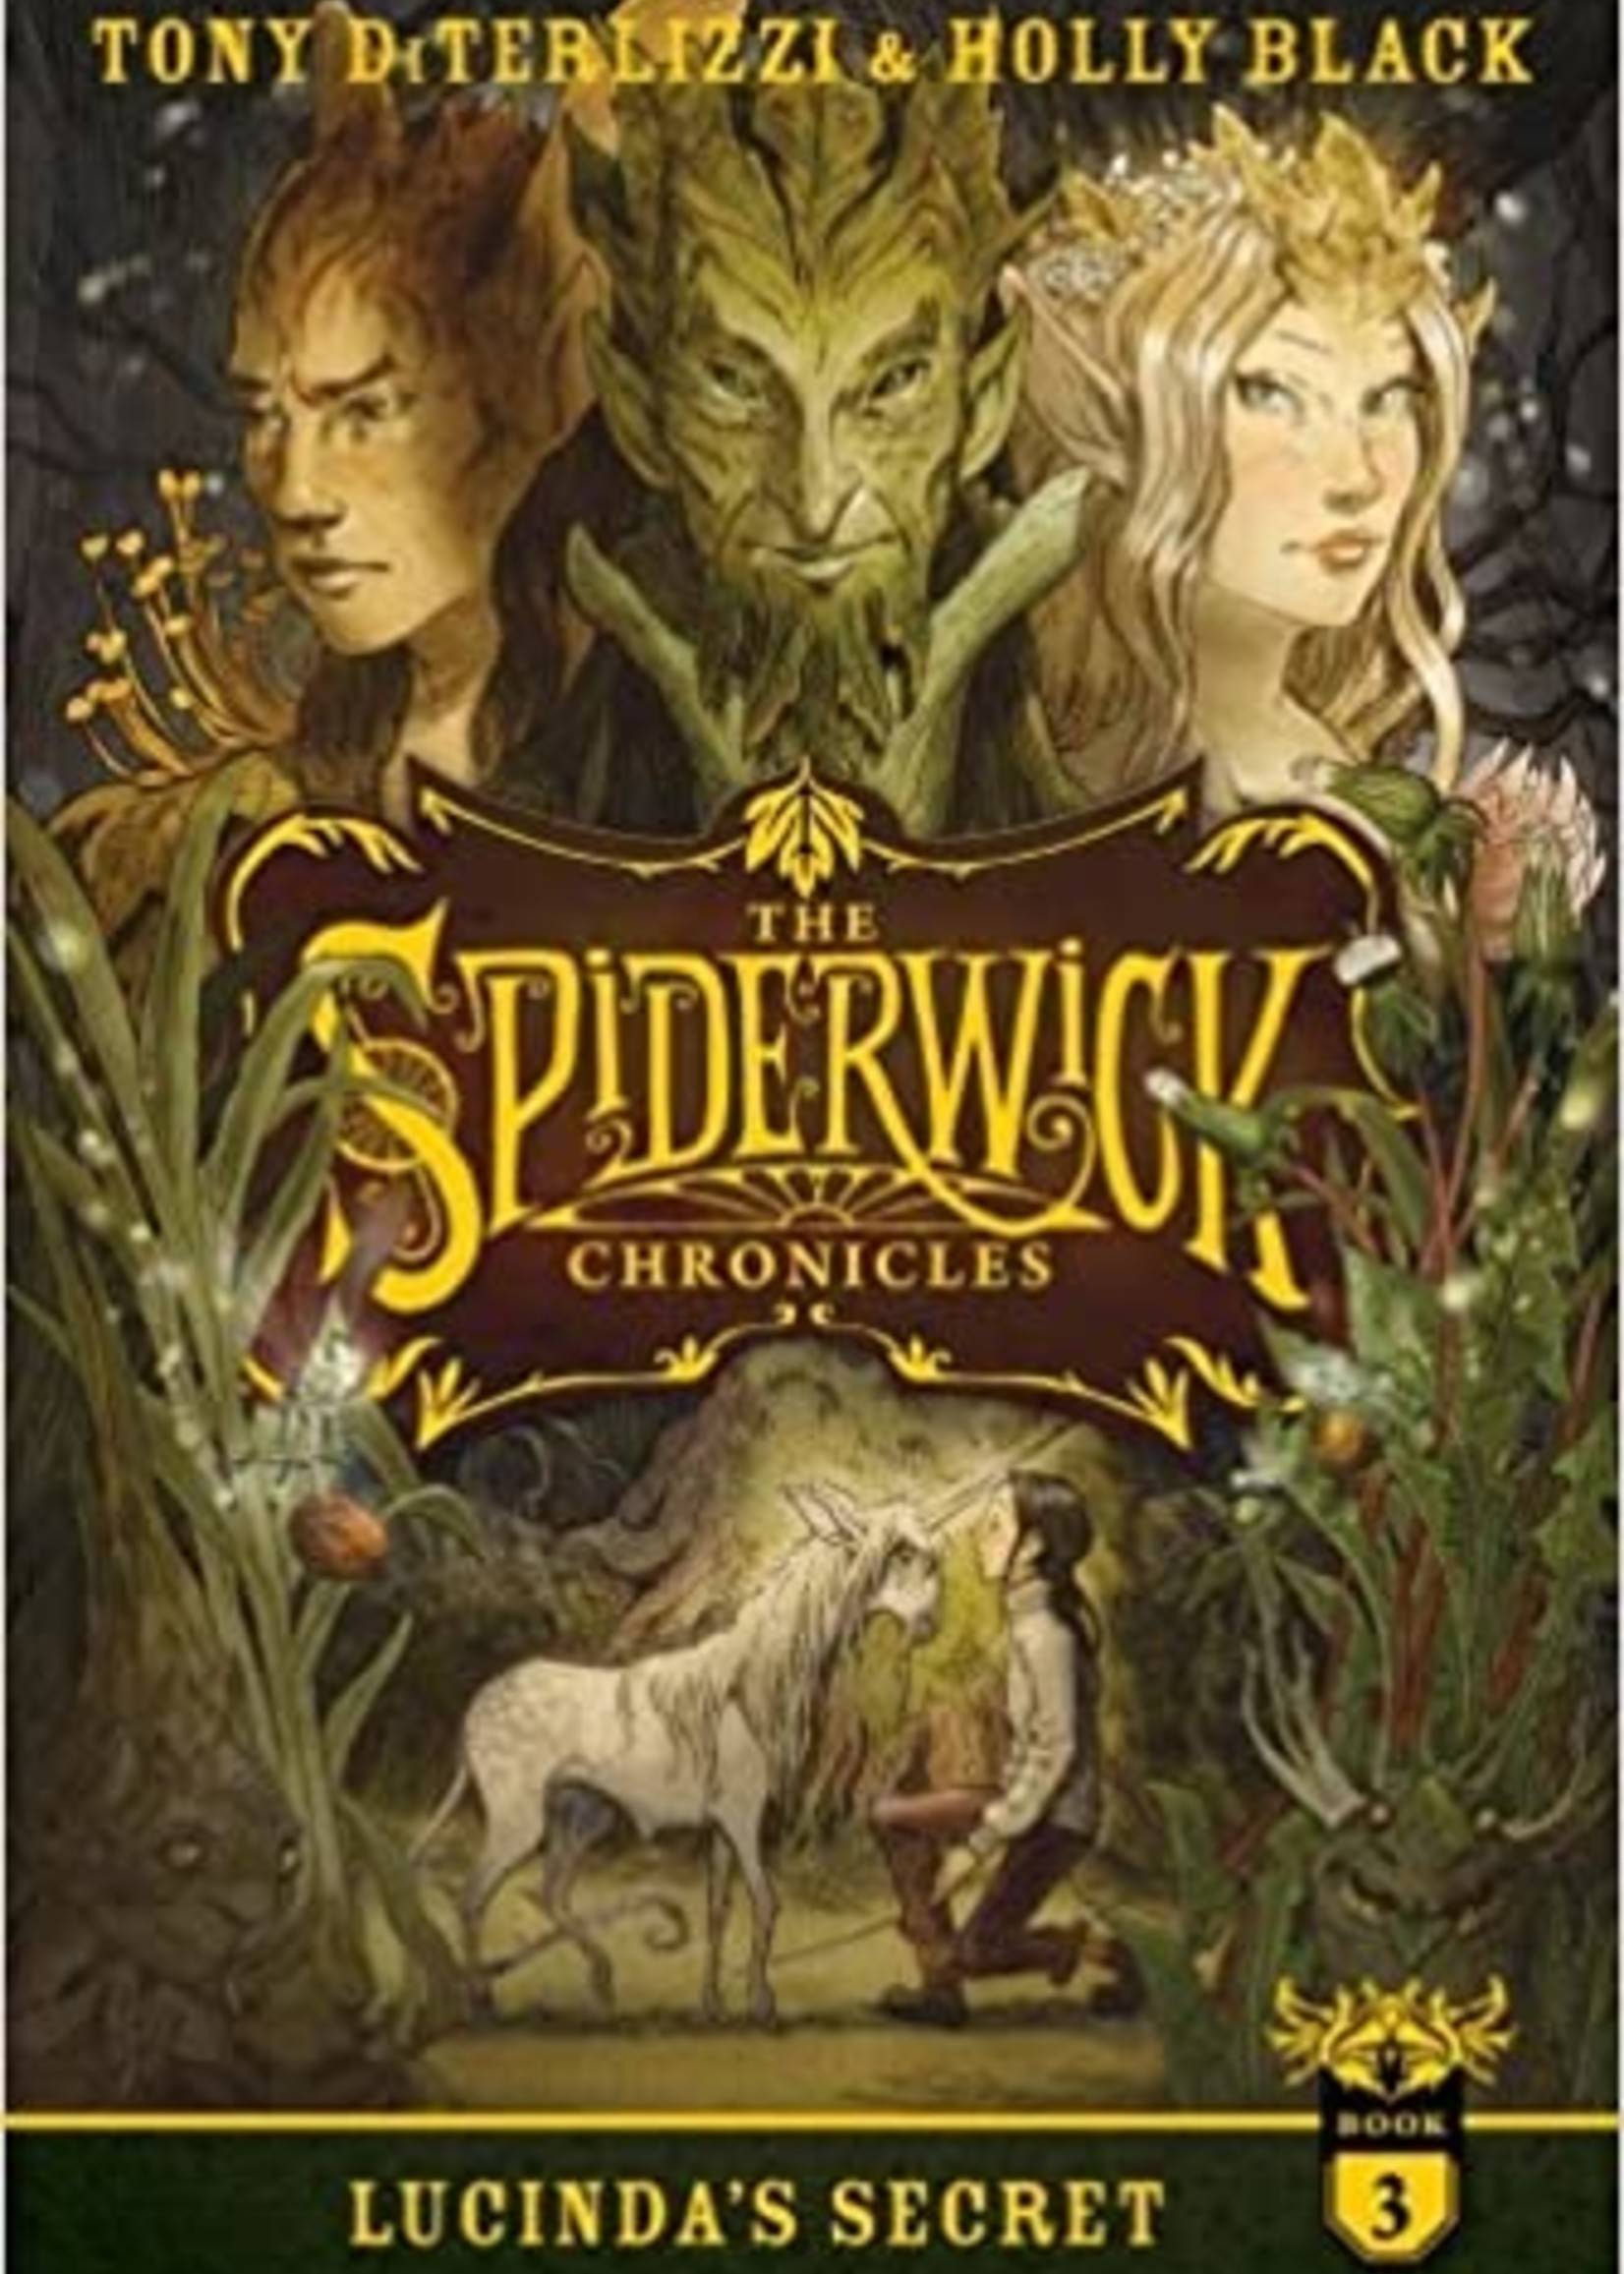 IMG : The Spiderwick Chronicles Lucinda's Secret#3